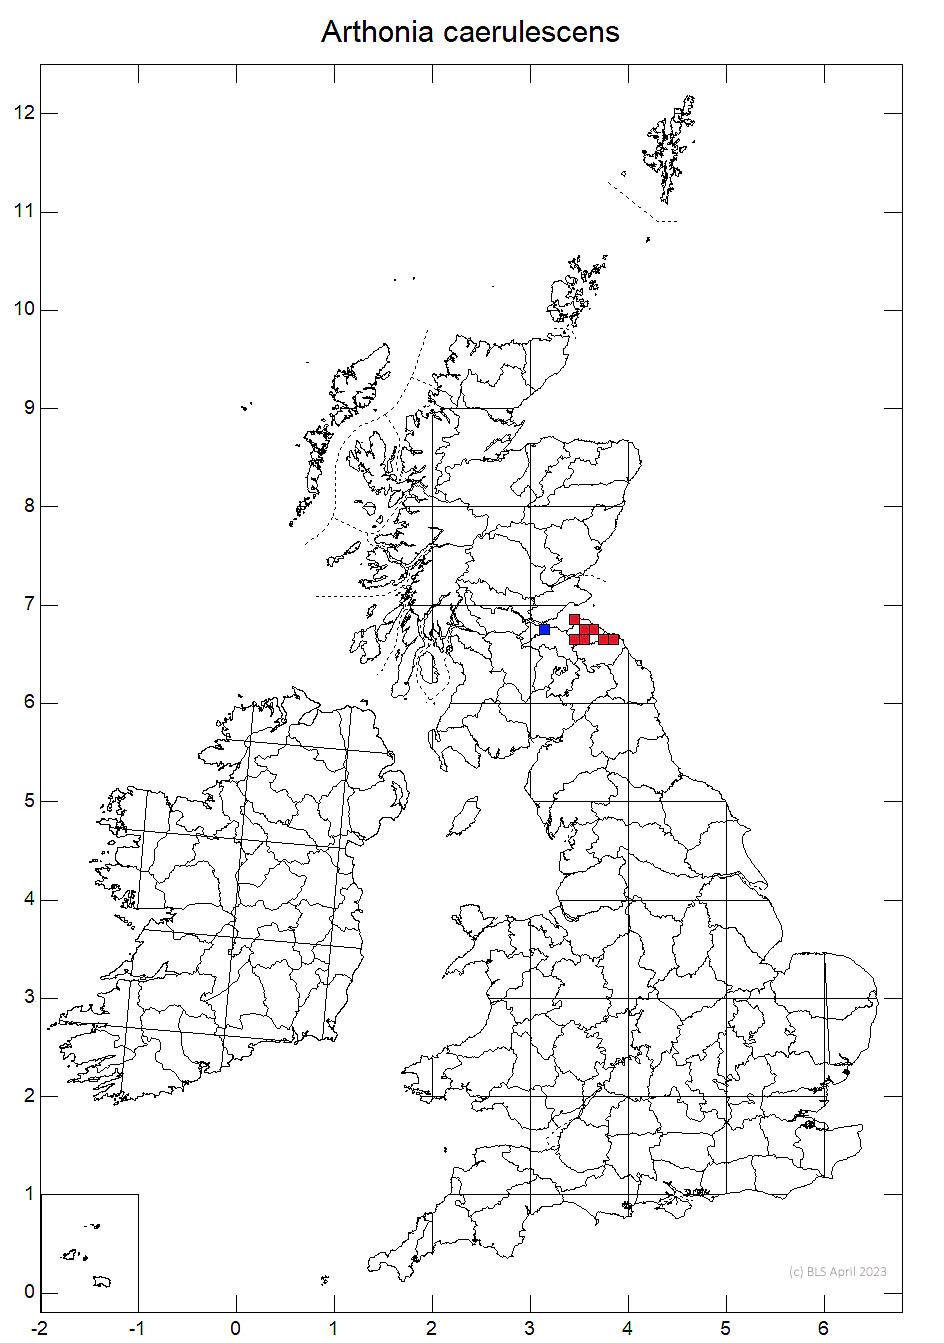 Arthonia caerulescens 10km sq distribution map